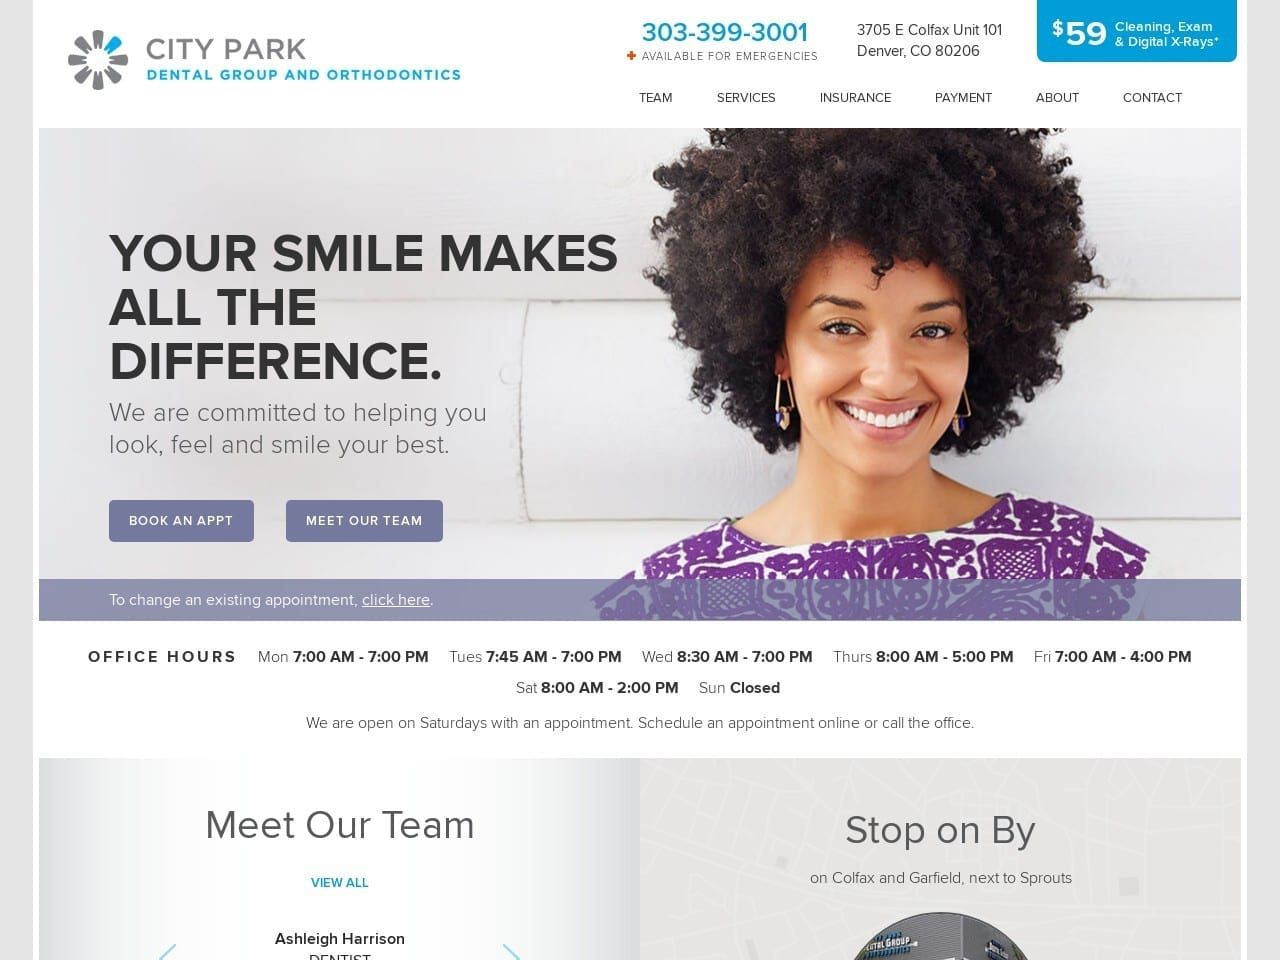 City Park Dental Group and Orthodontics Website Screenshot from cityparkdentalgroup.com